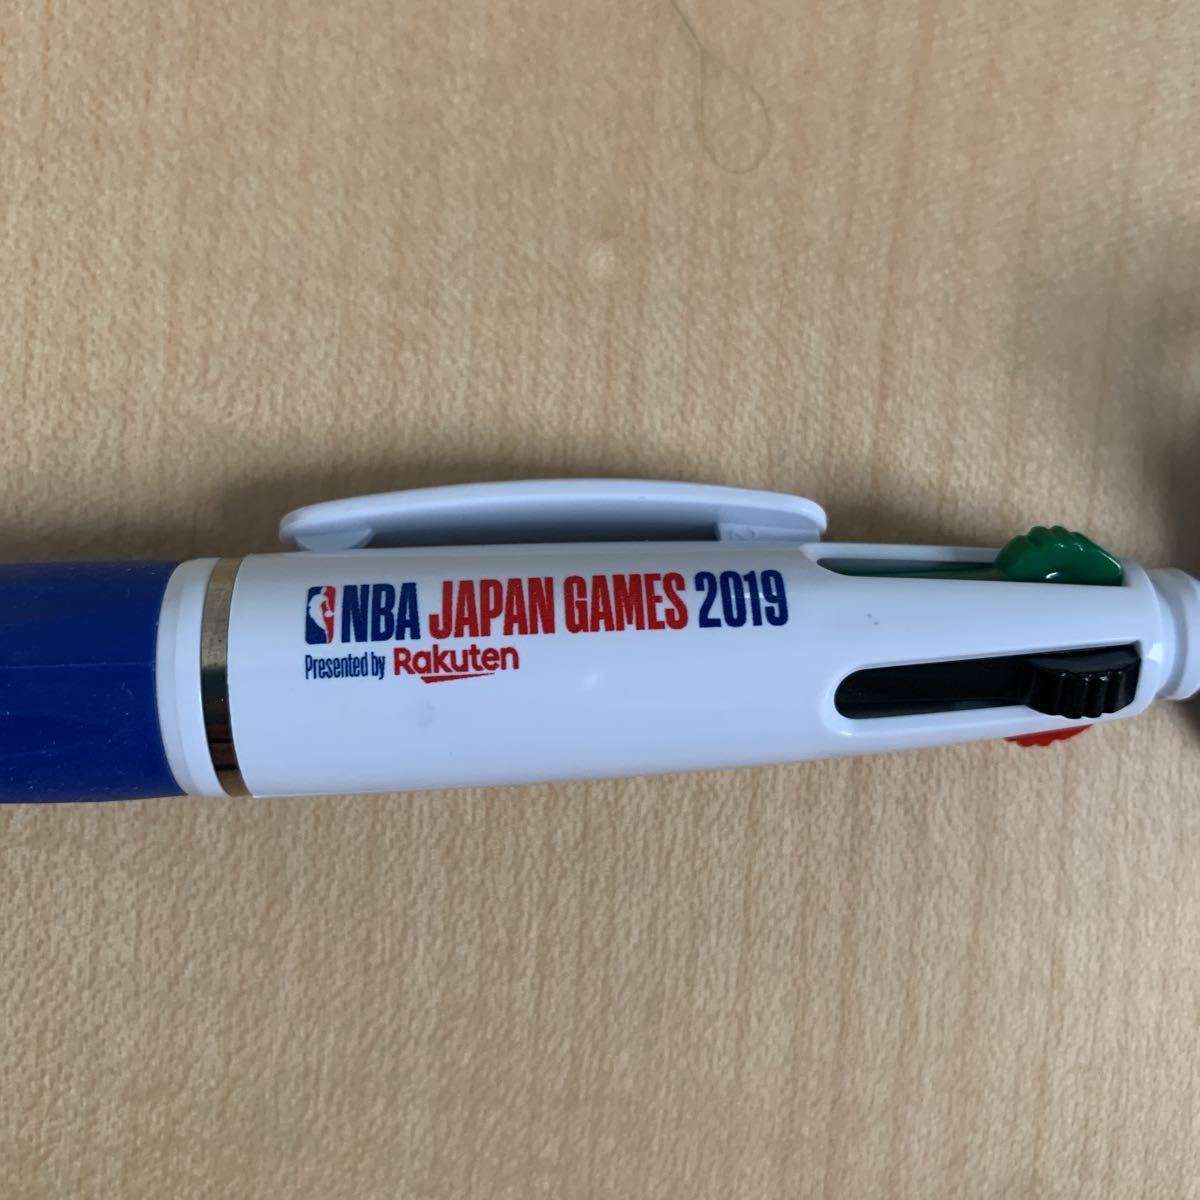 NBA JAPAN GAMES 2019・4色ボールペン・メモ帳・ピンバッジ・パスケースのセット・写真追加_画像3